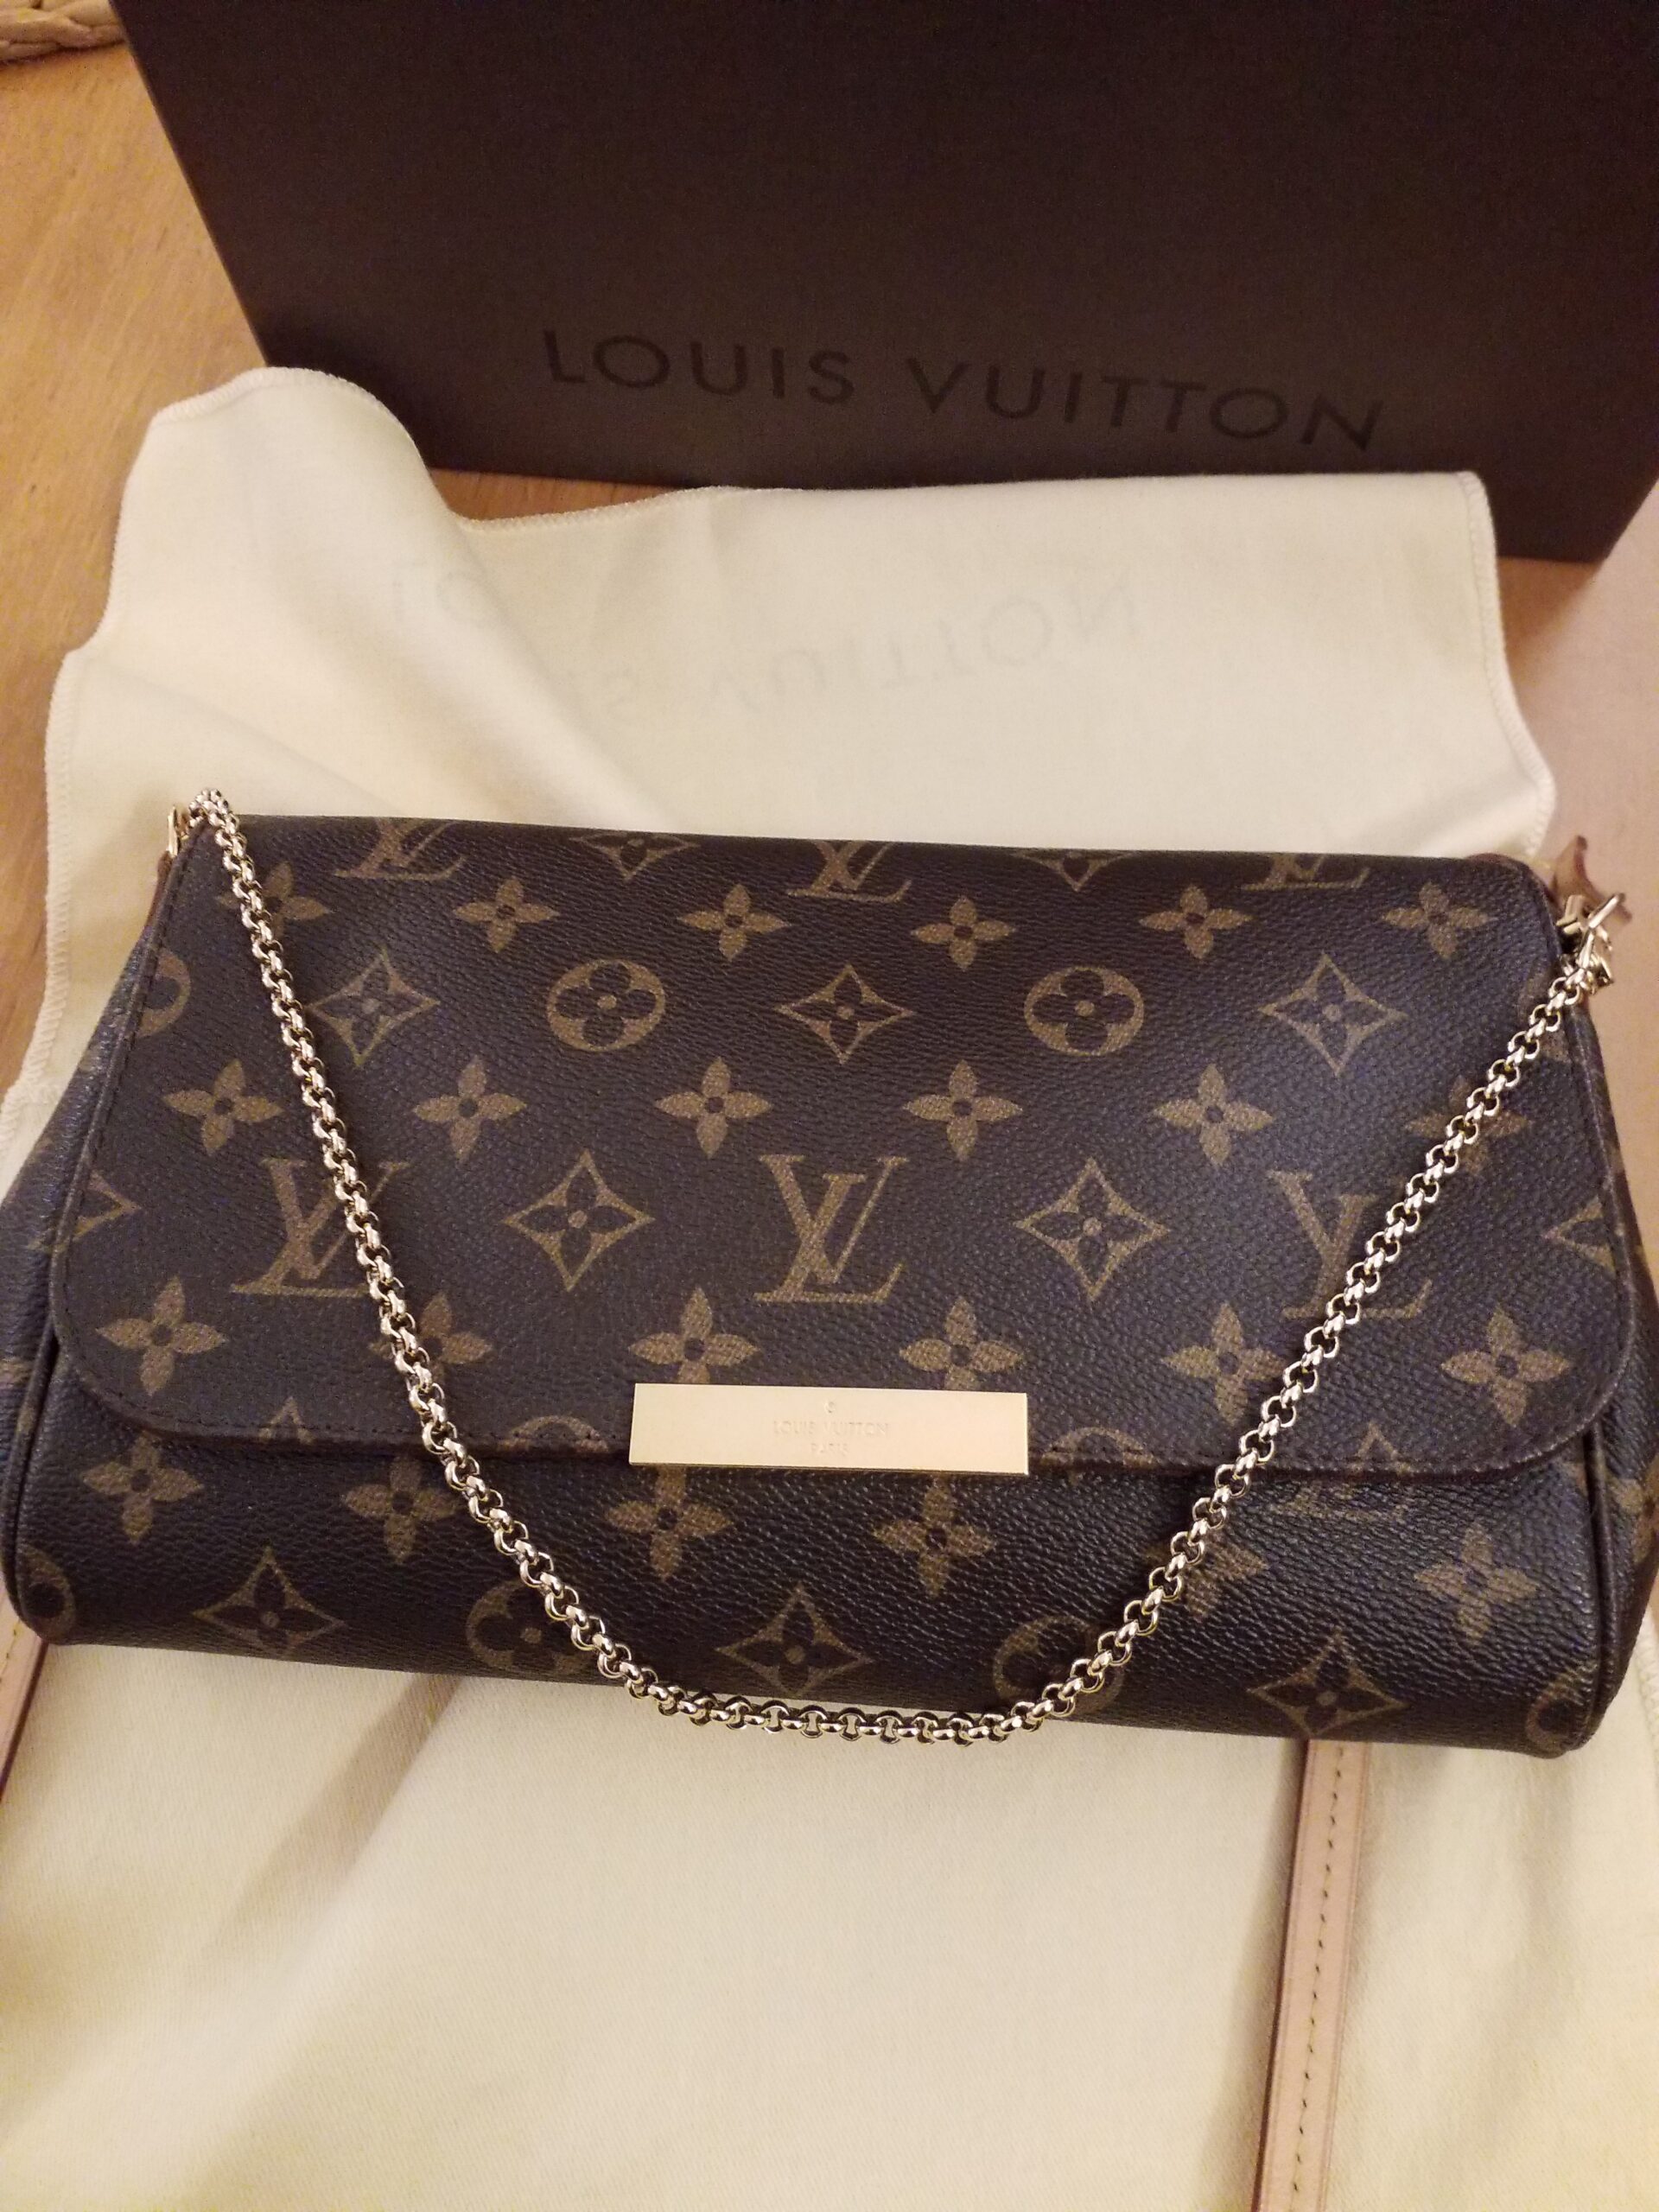 modabox.ec - La Favorite MM de Louis Vuitton es una cartera